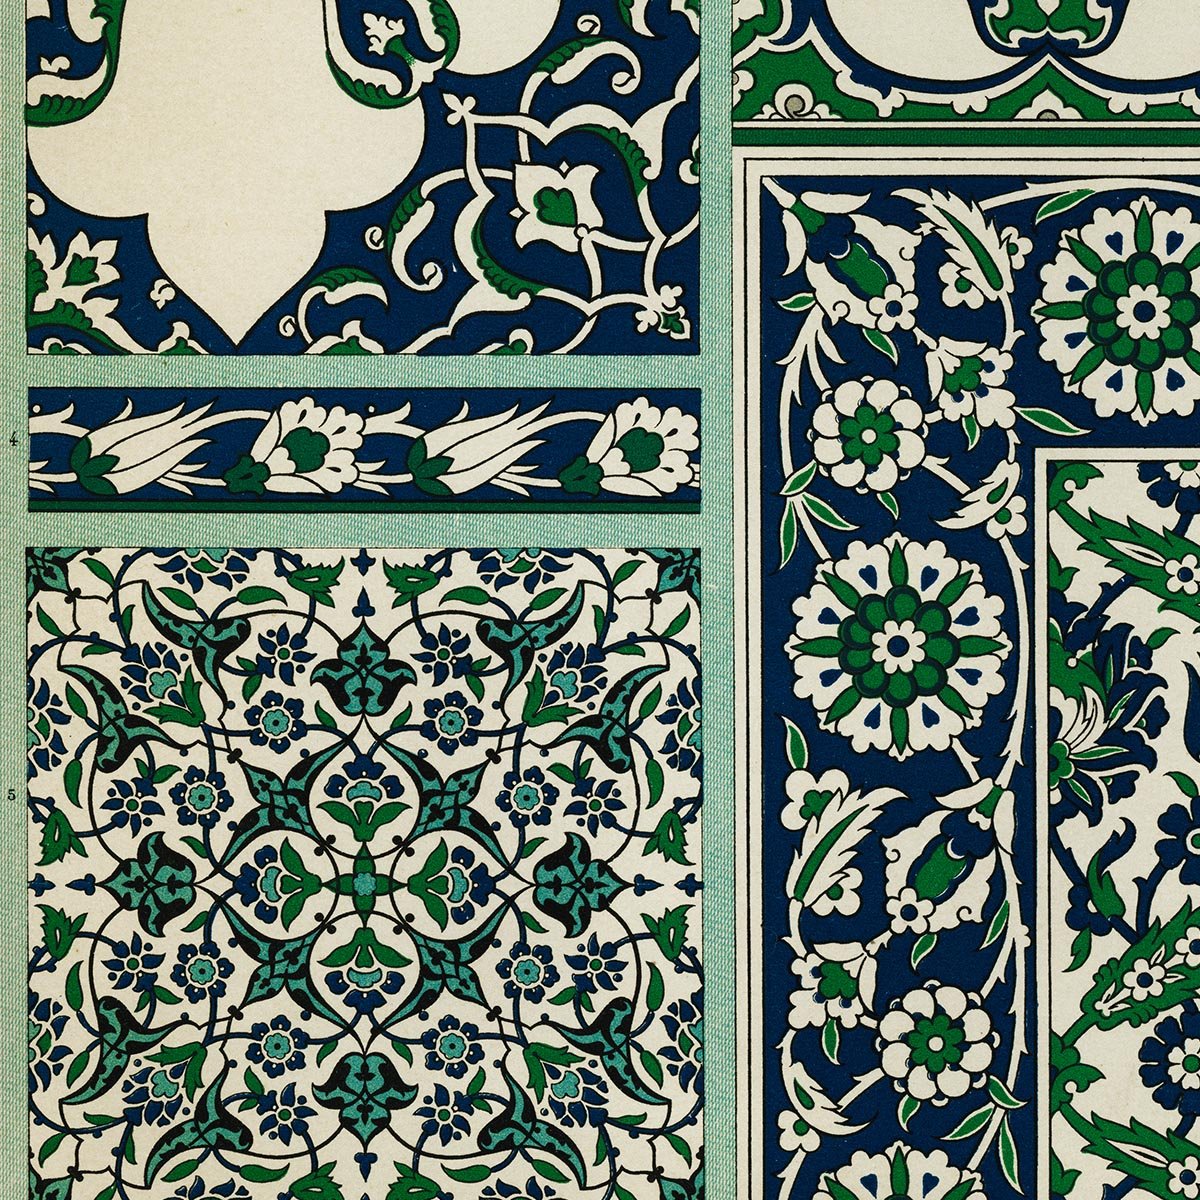 Persian Engraving Poster Nr 5